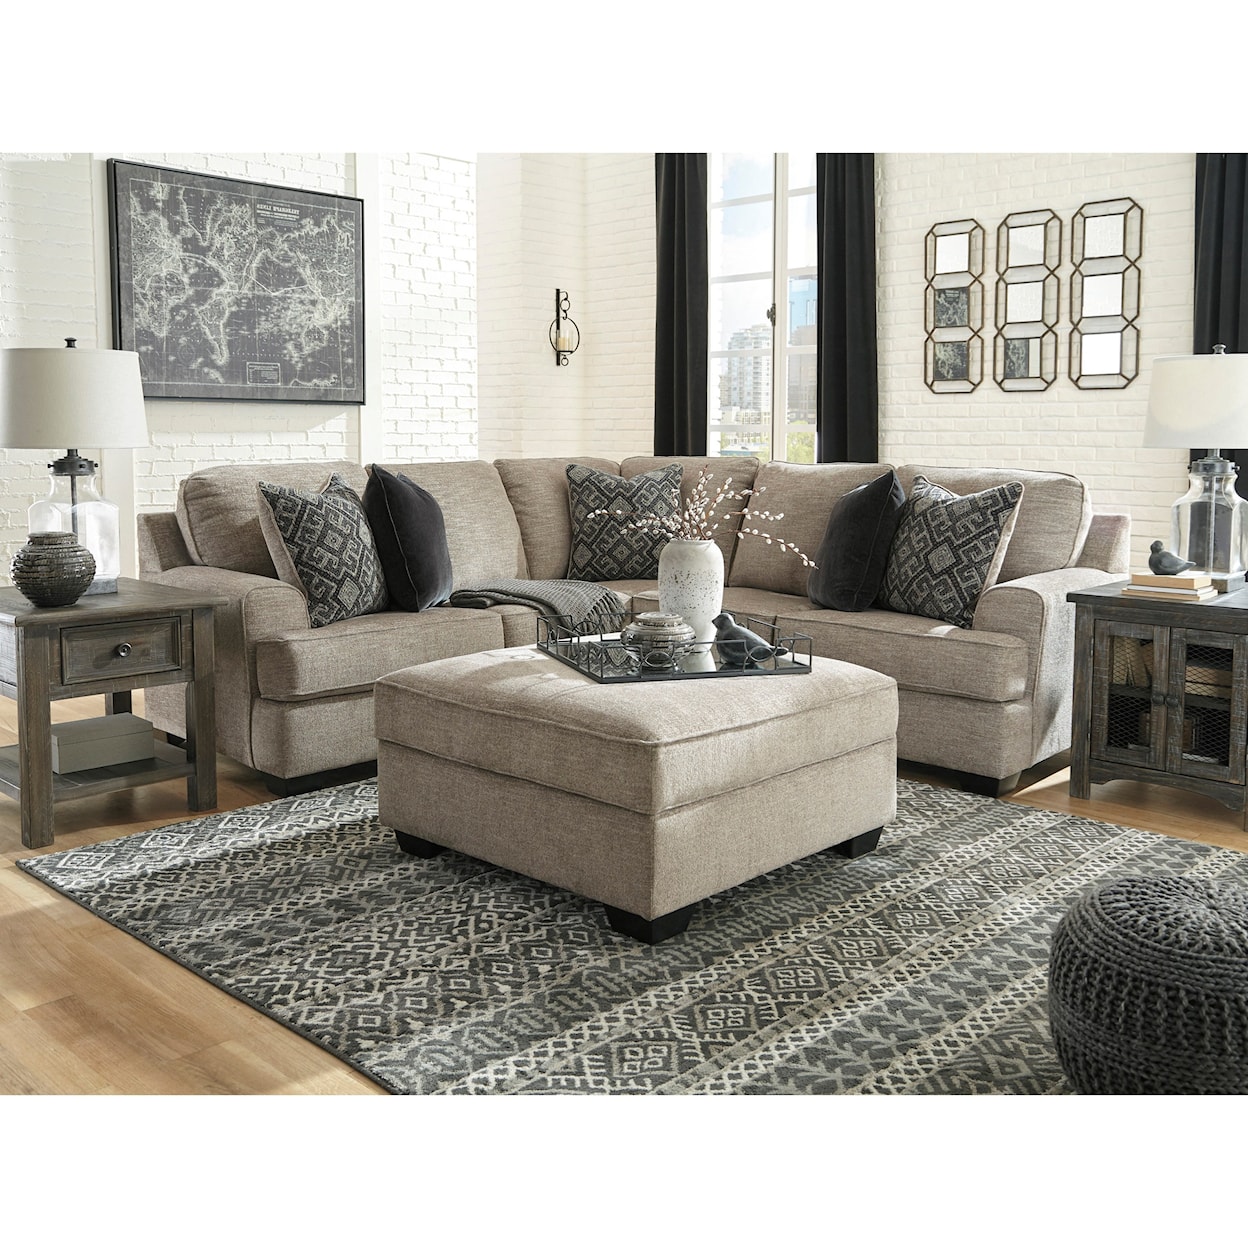 Ashley Furniture Signature Design Bovarian Stationary Living Room Group